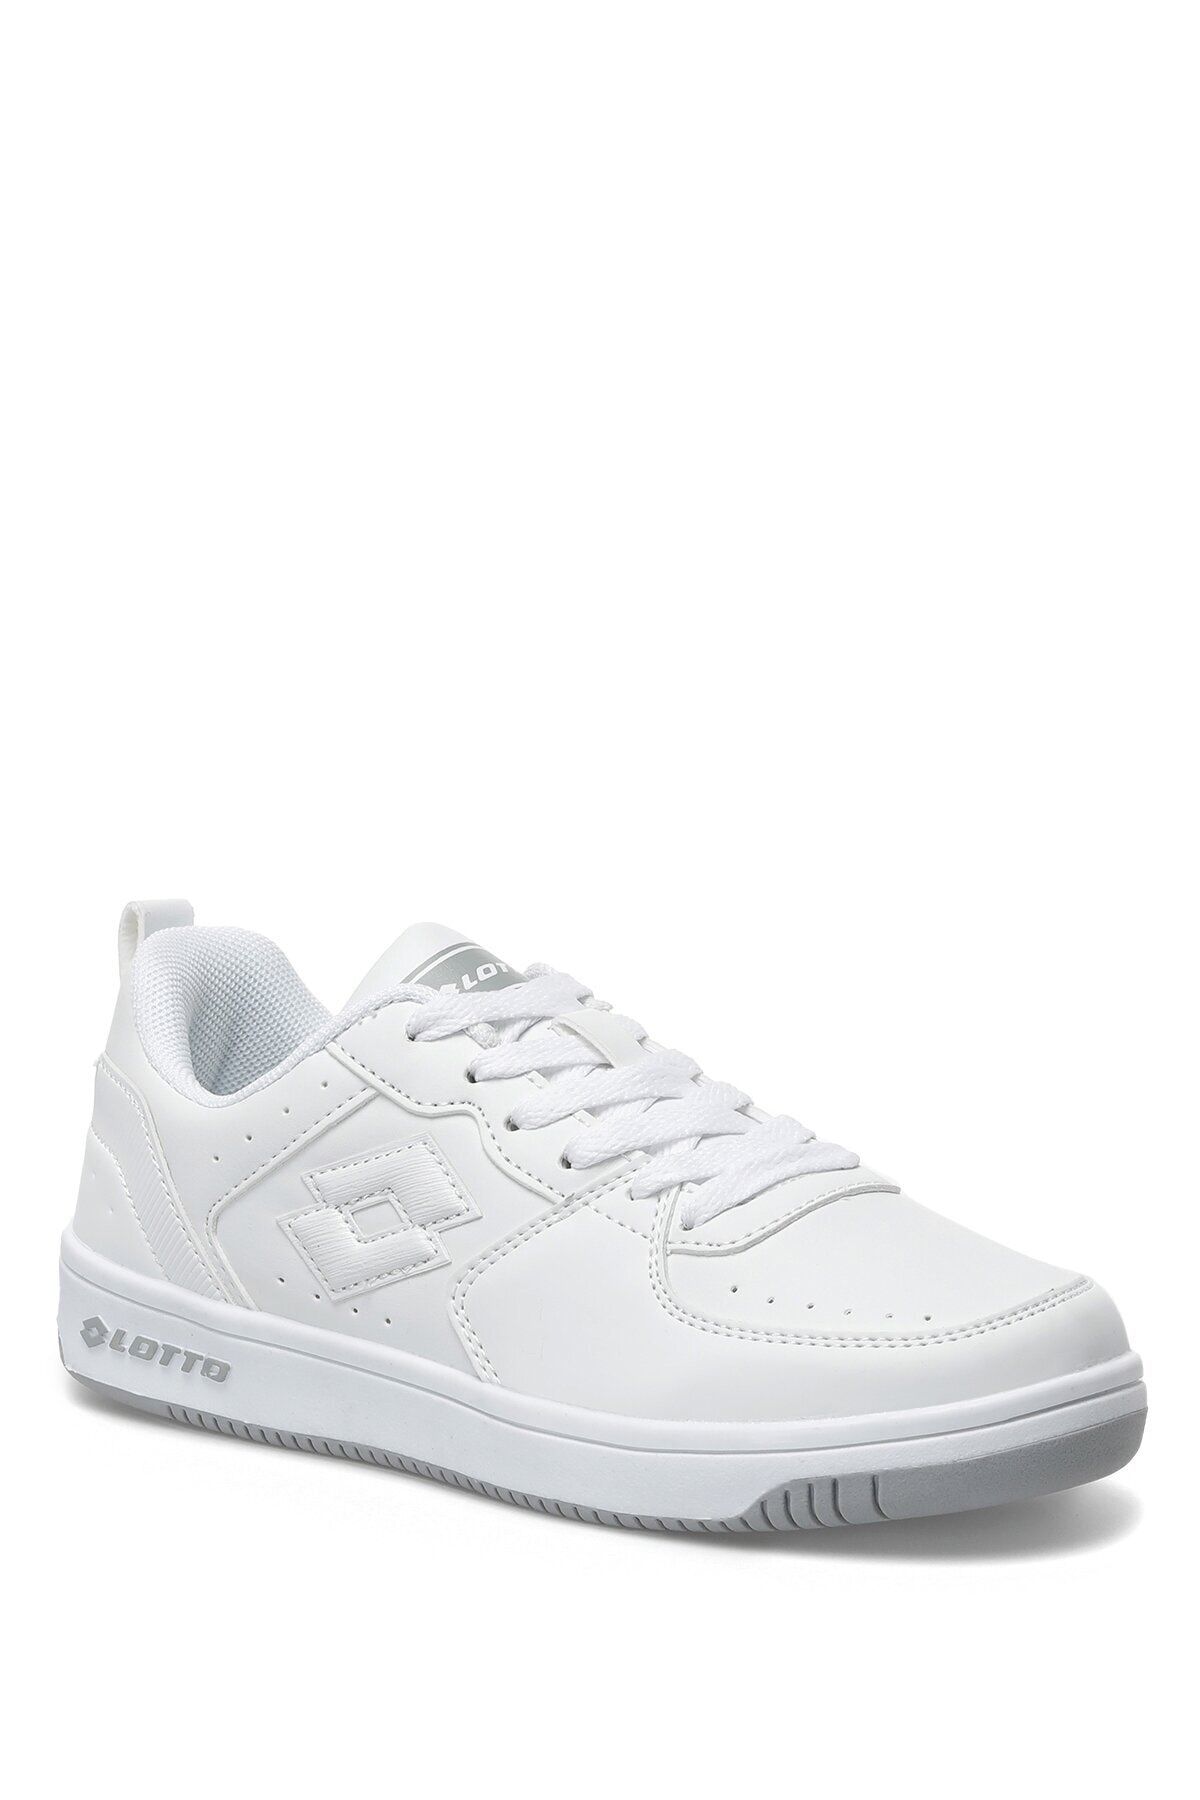 Lotto Beyaz - Berwıck Gr 2fx Unisex Sneaker